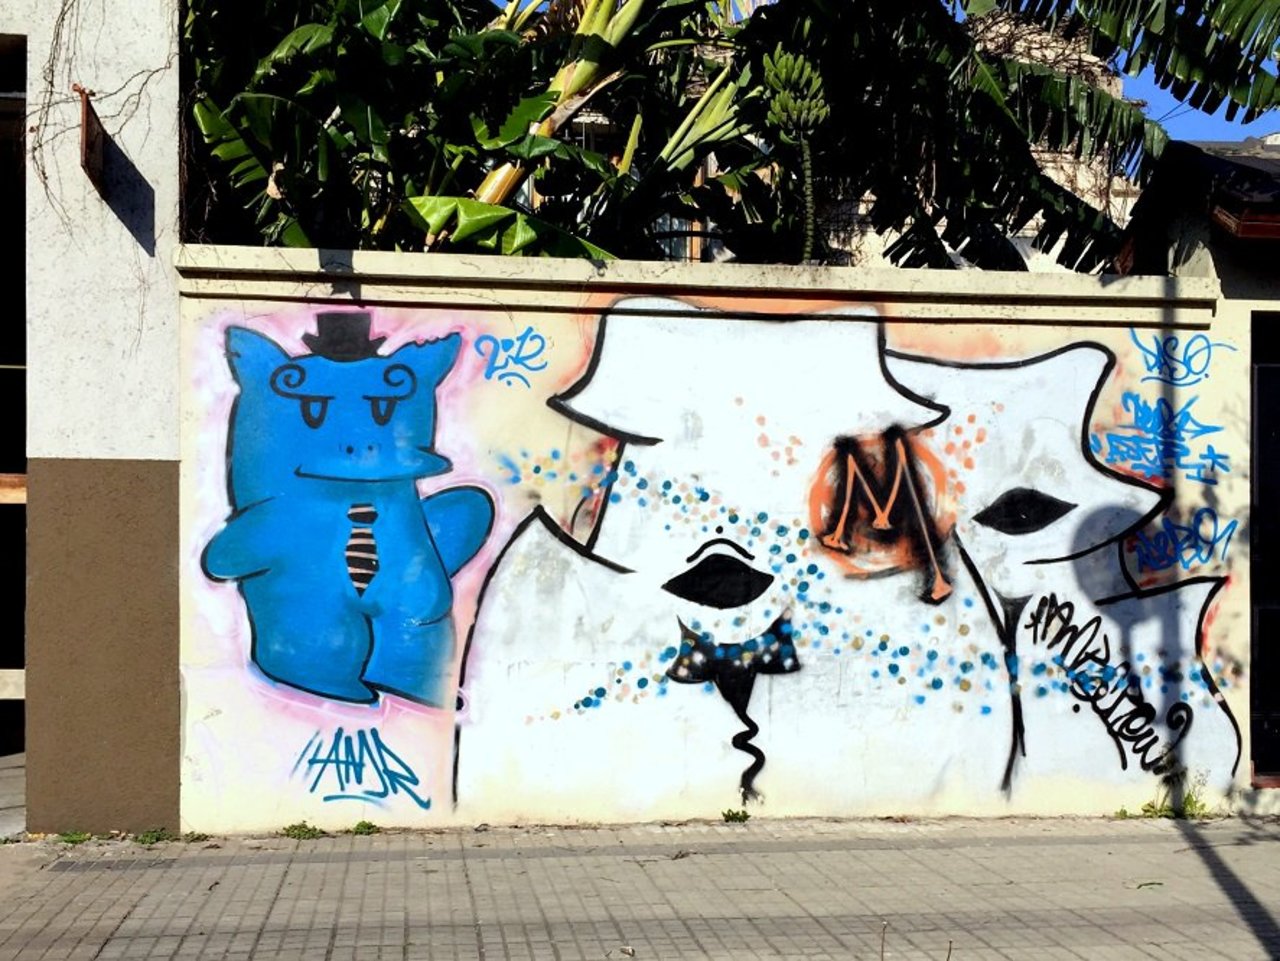 RT @DickieRandrup: #Graffiti de hoy: << El oso azul >> Calle 9, 67y68 #LaPlata #Argentina #StreetArt #UrbanArt #ArteUrbano https://t.co/5uc7CEyQPG